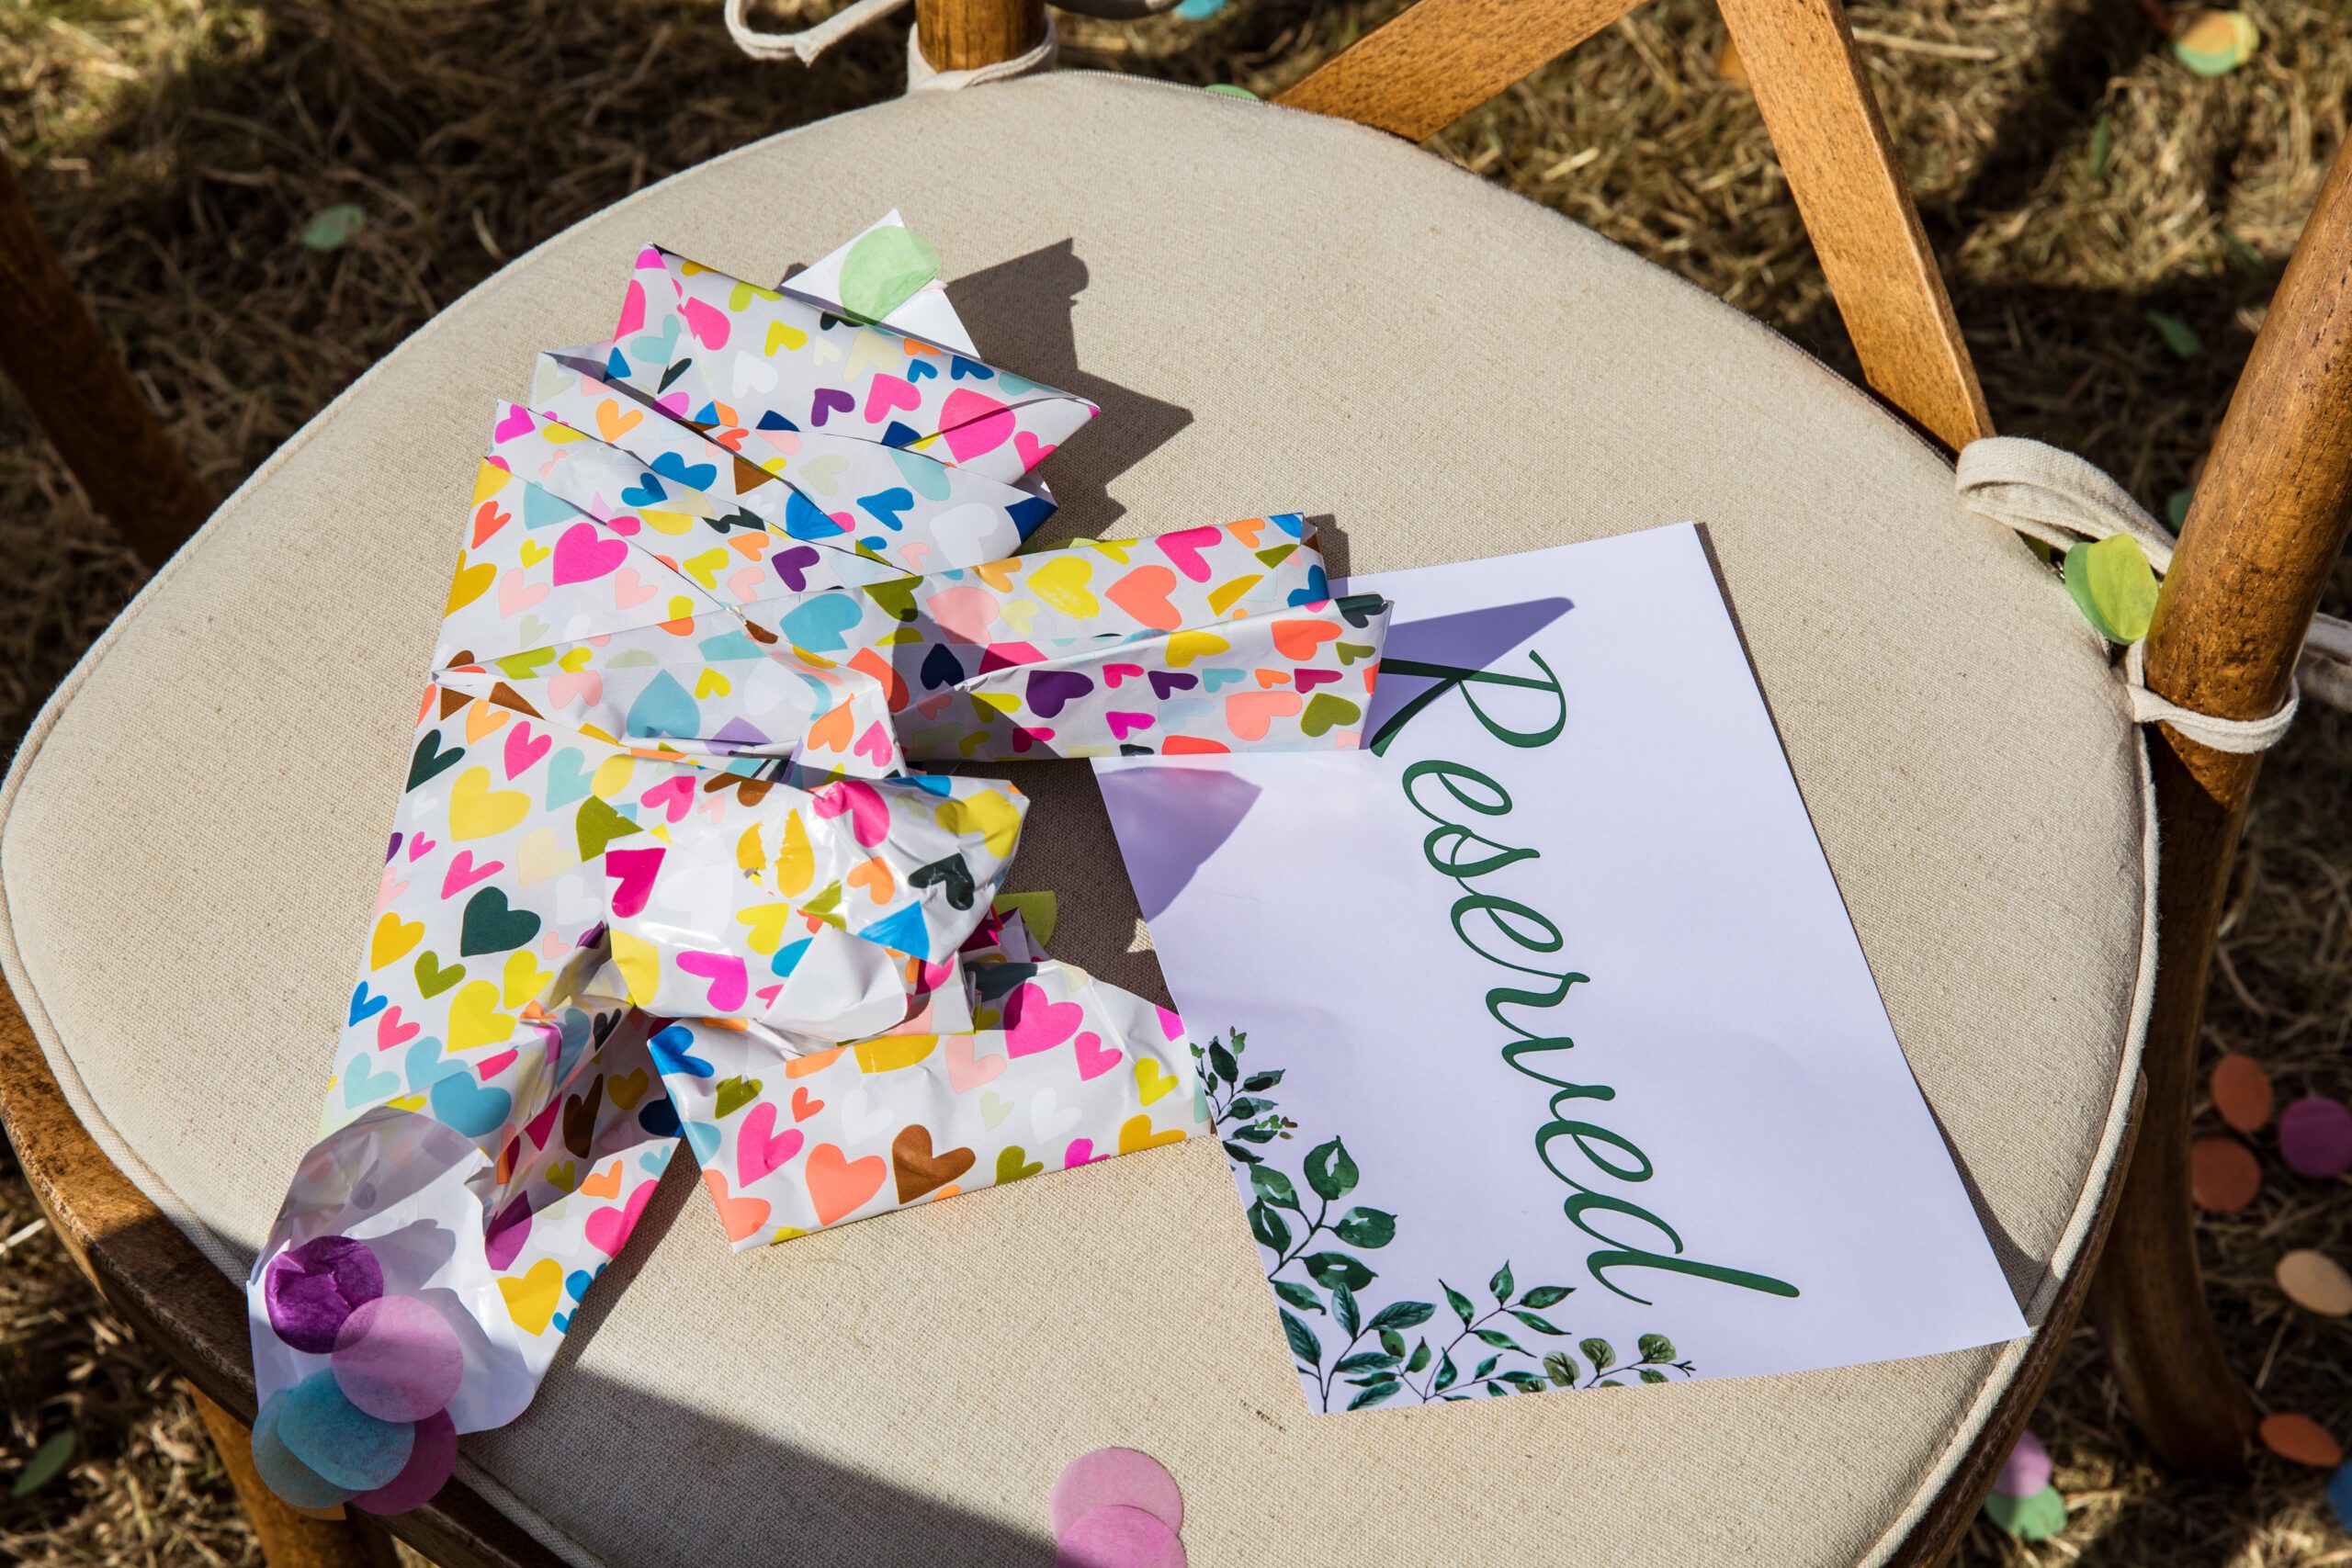 wedding confetti lies on a chair in hertfordshire